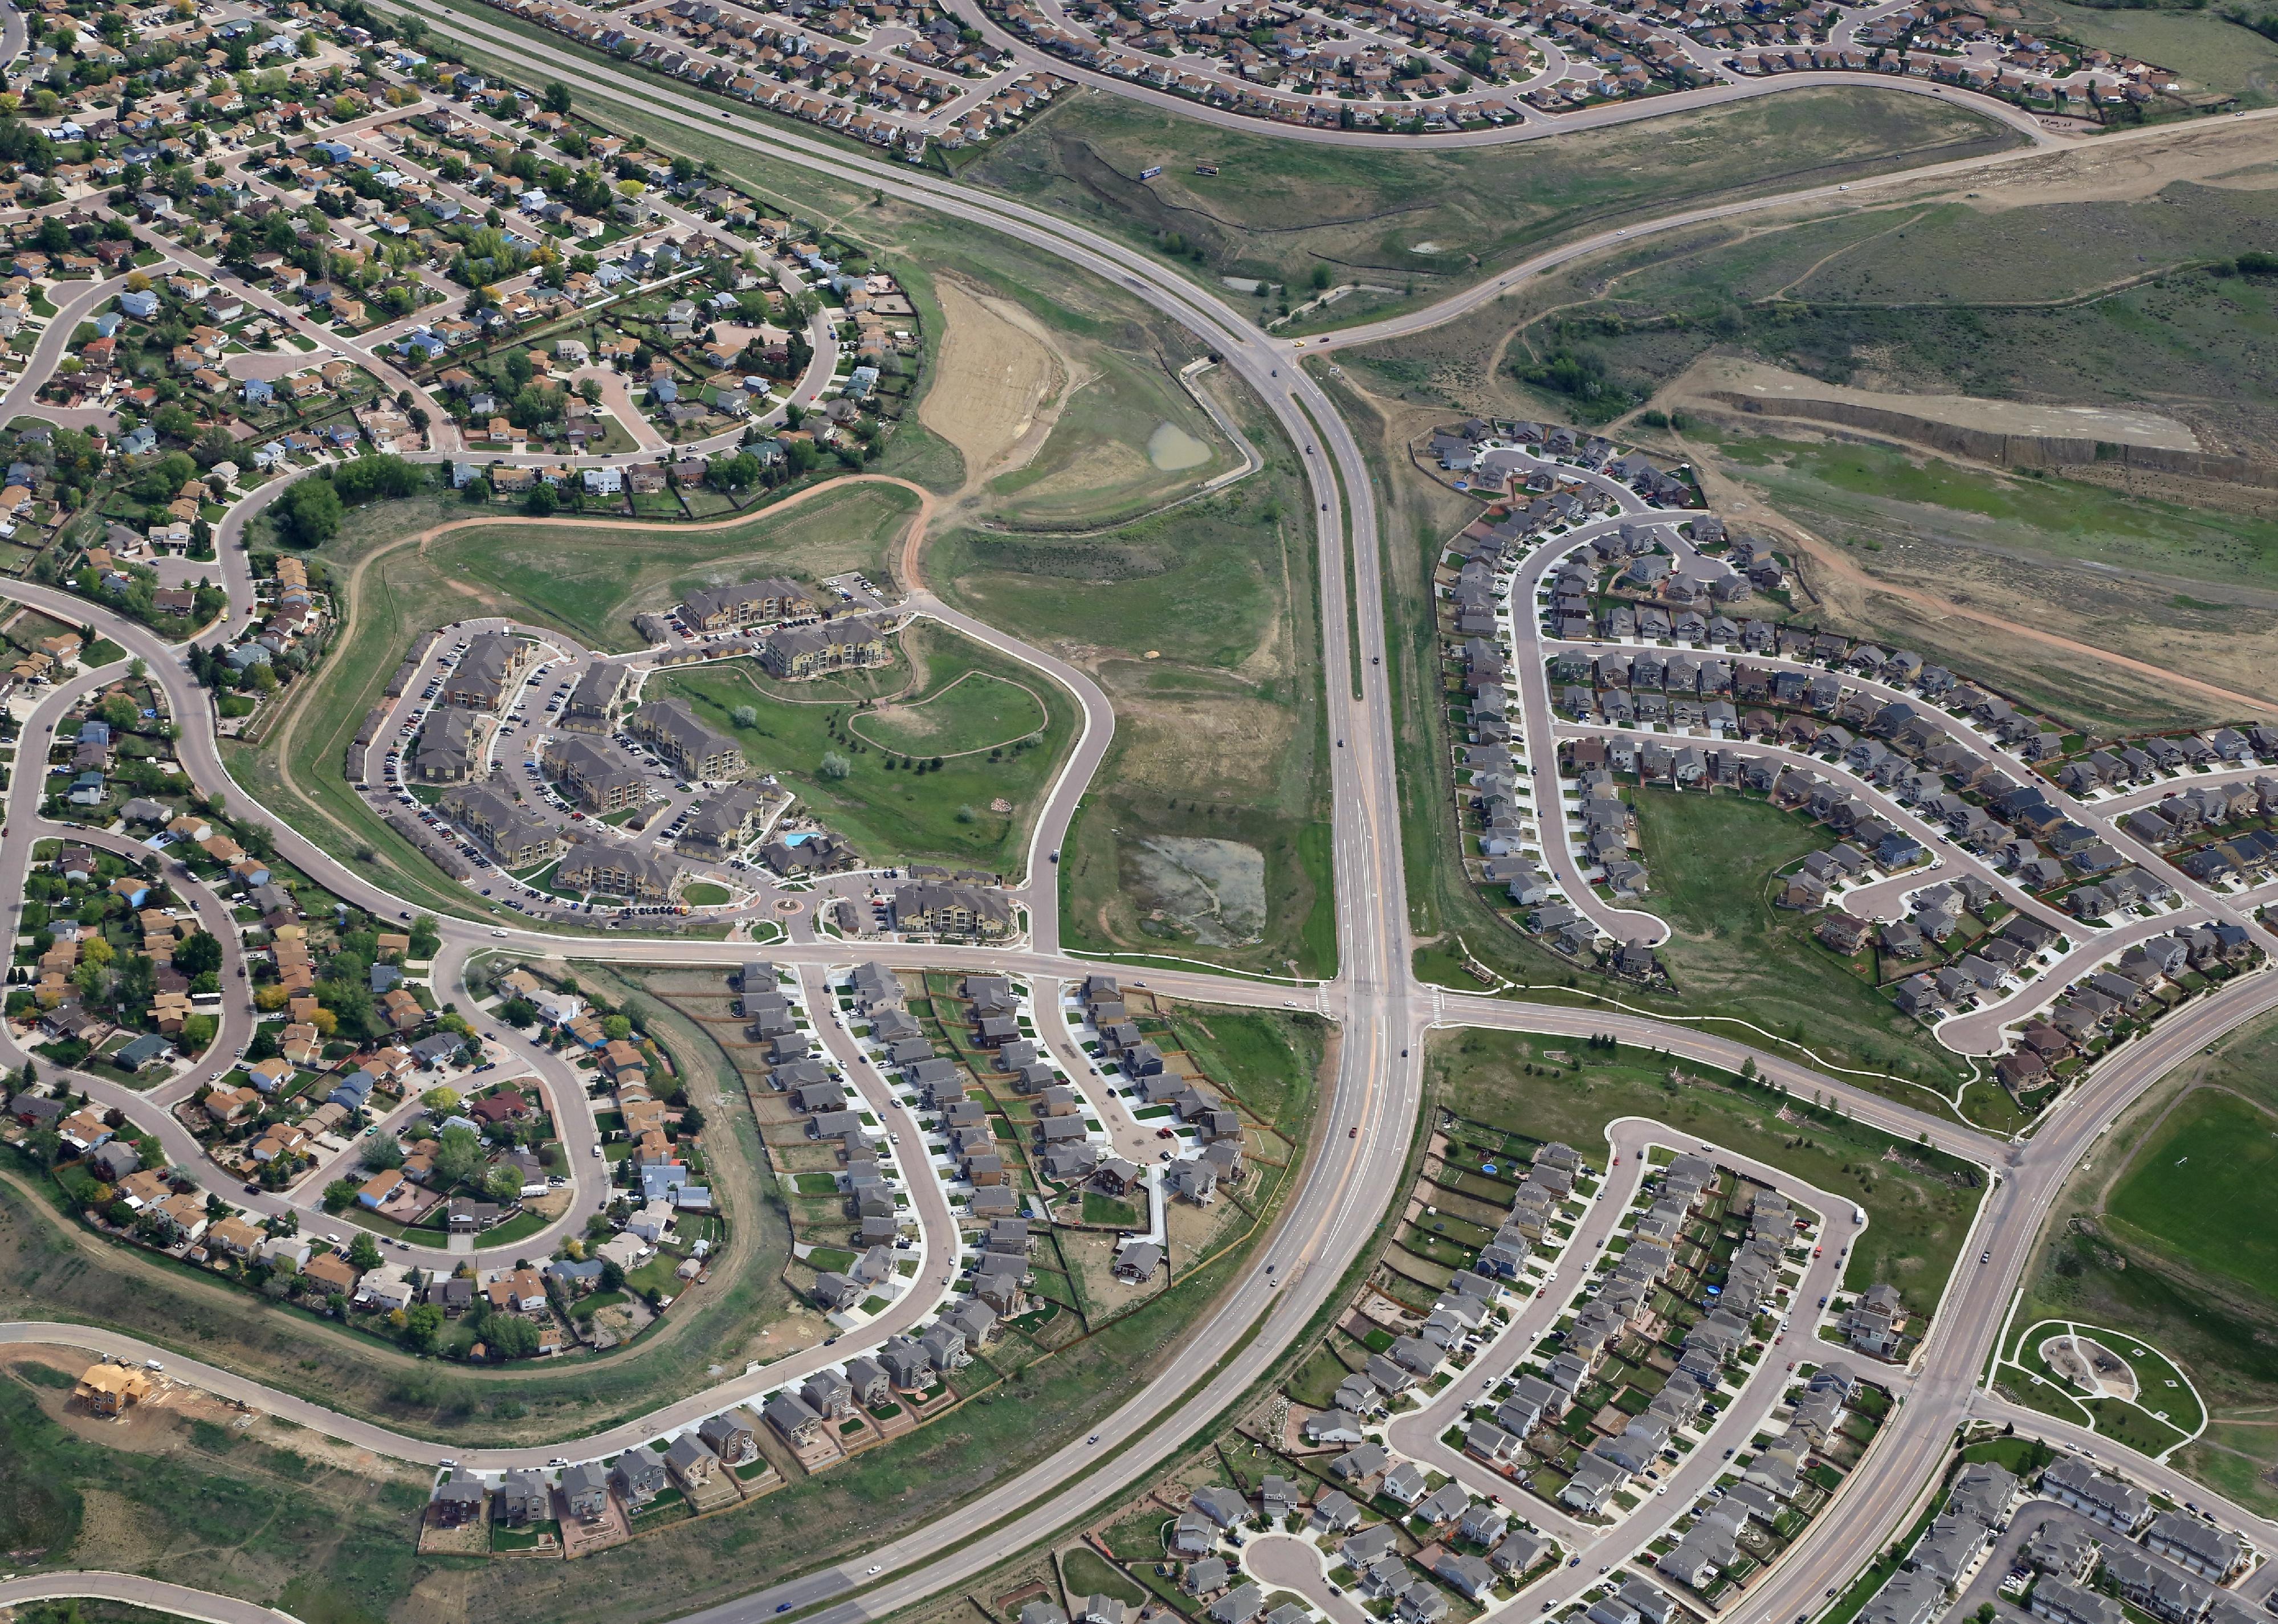 Aerial view of housing development in Colorado Springs, Colorado.